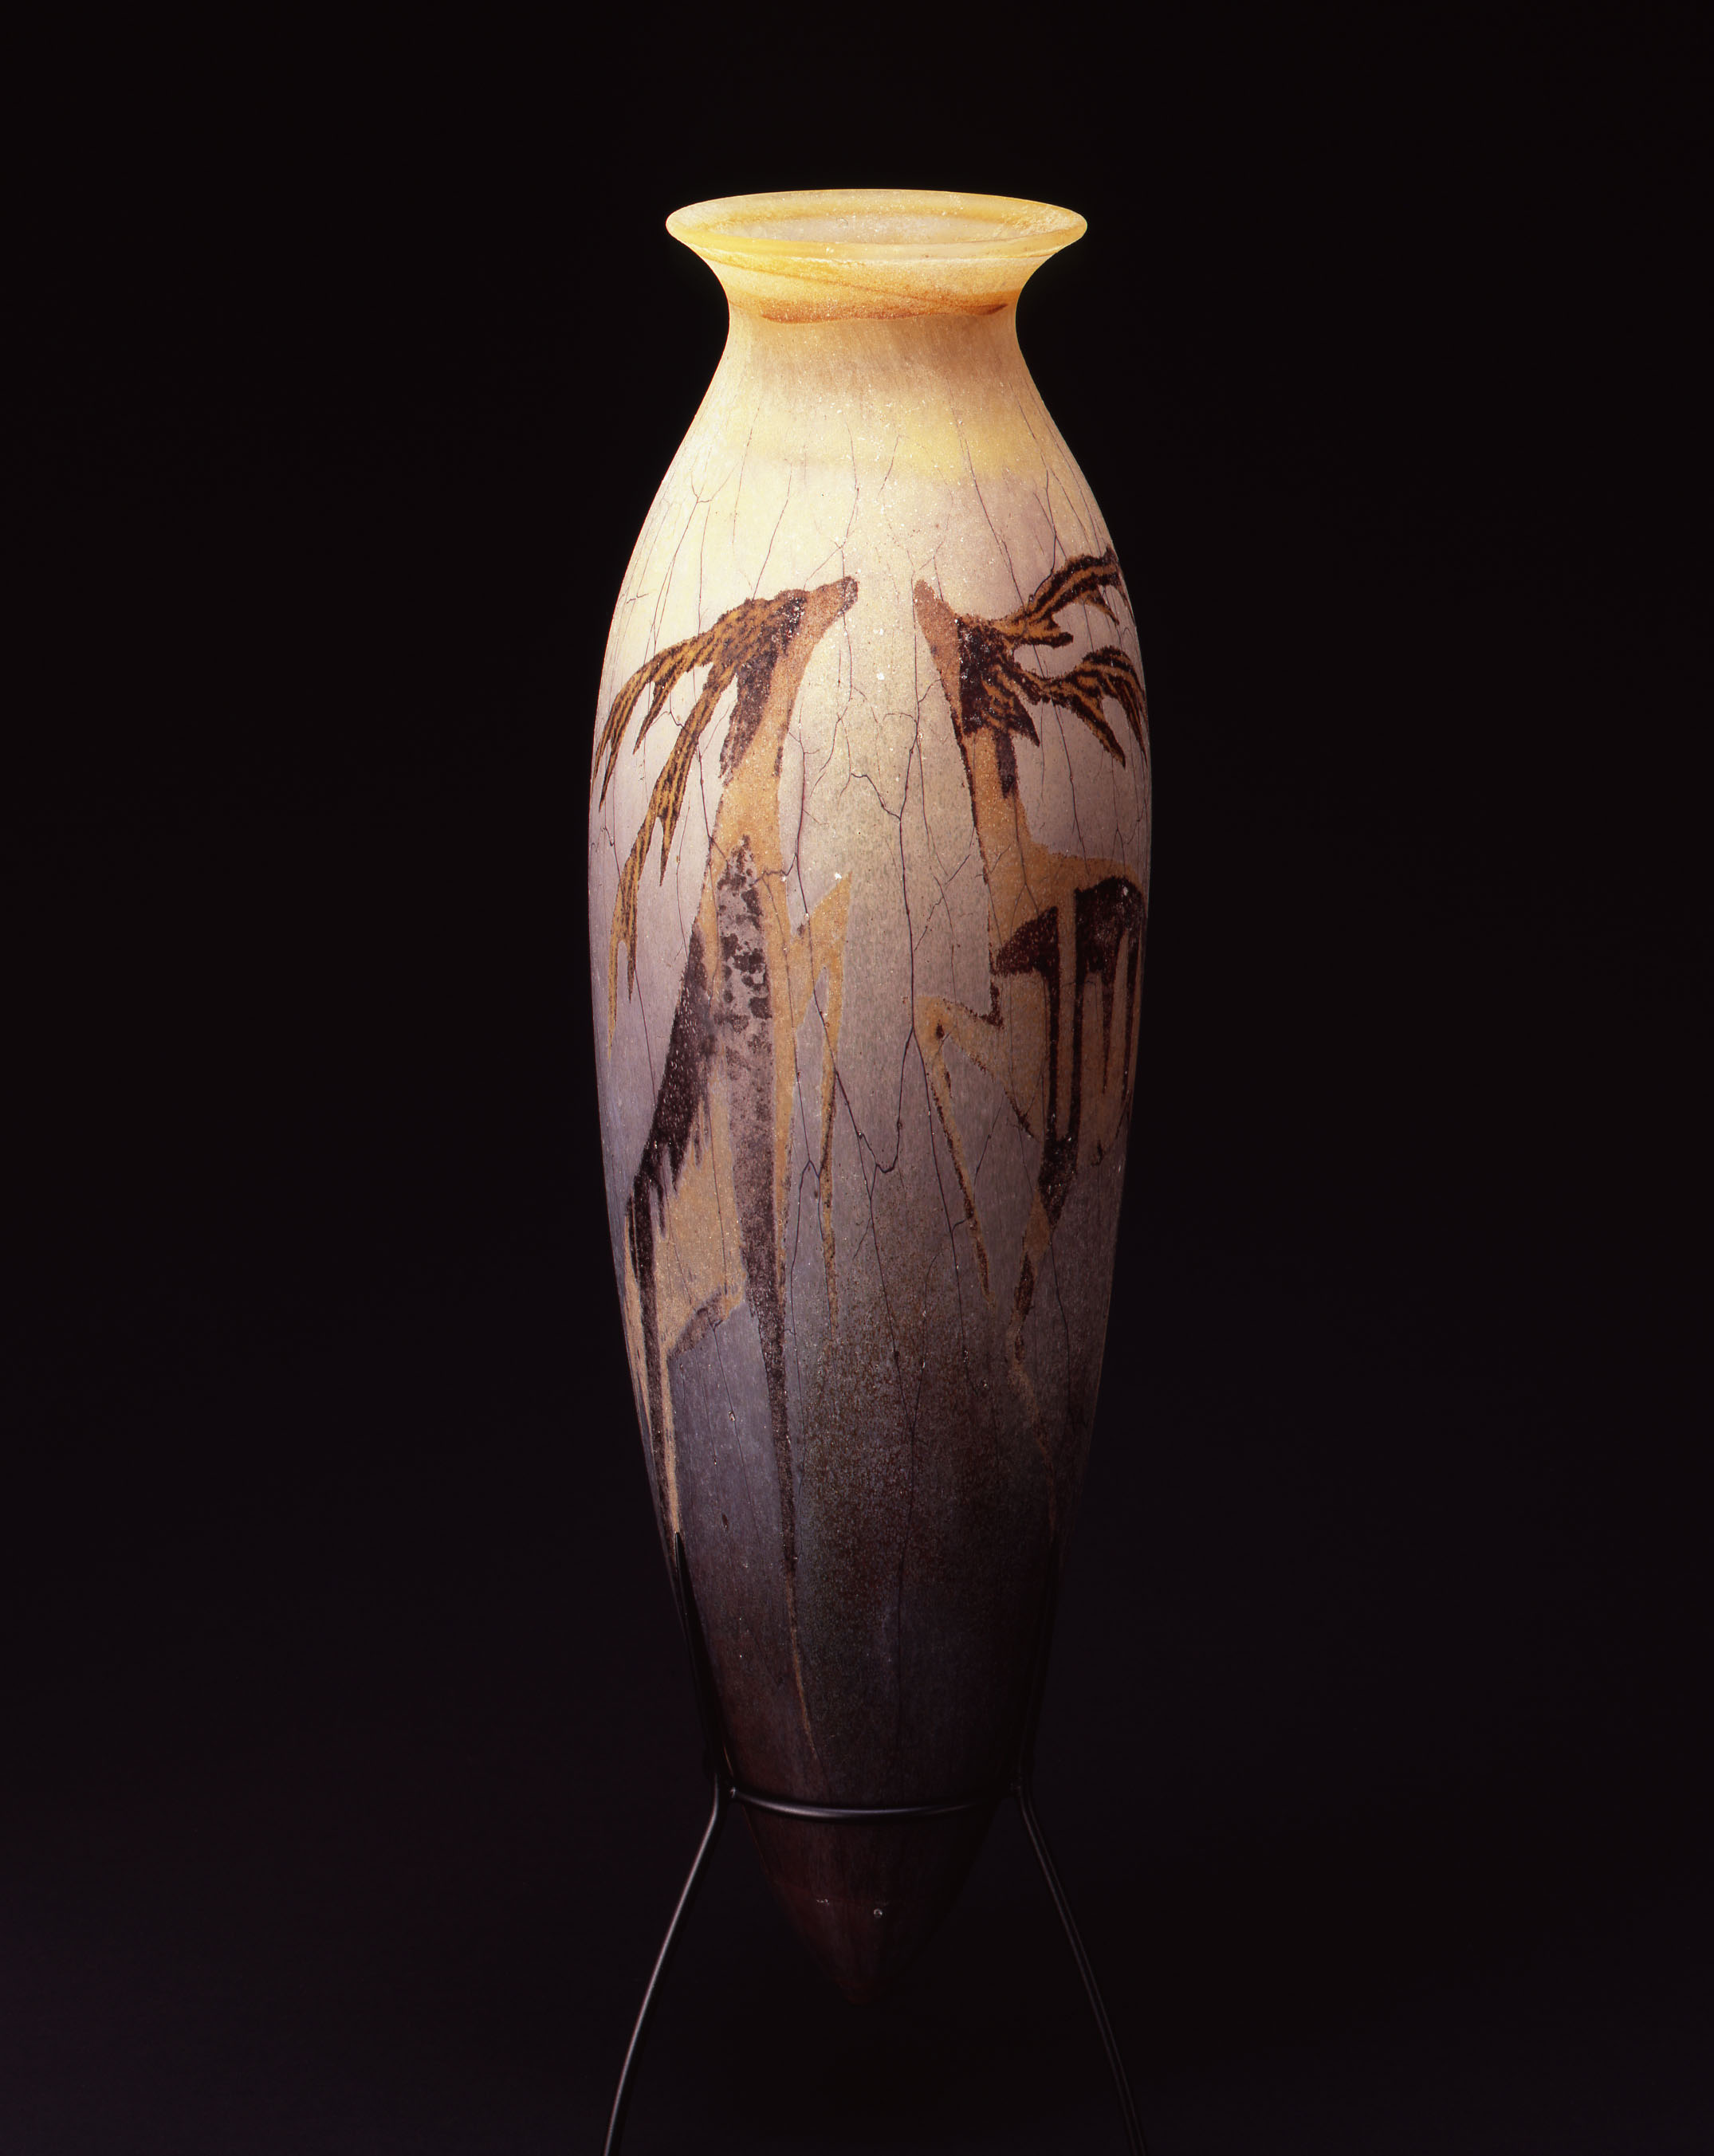  William Morris,&nbsp; Urn with Deer&nbsp; (2004, glass, 21 5/8 x 6 1/4 x 6 1/4&nbsp;inches), WM.27 